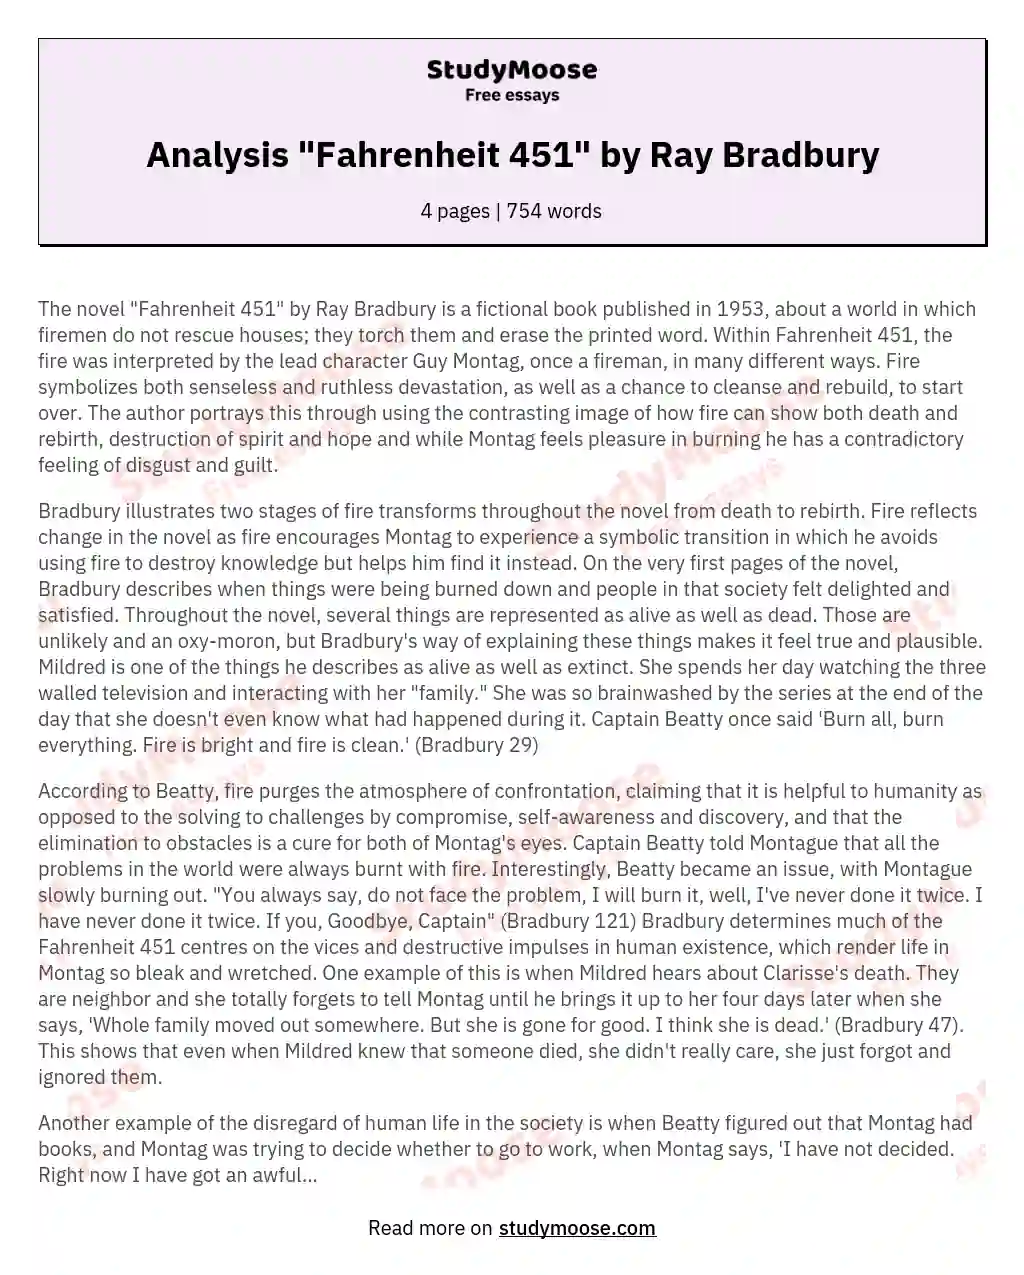 Analysis "Fahrenheit 451" by Ray Bradbury essay